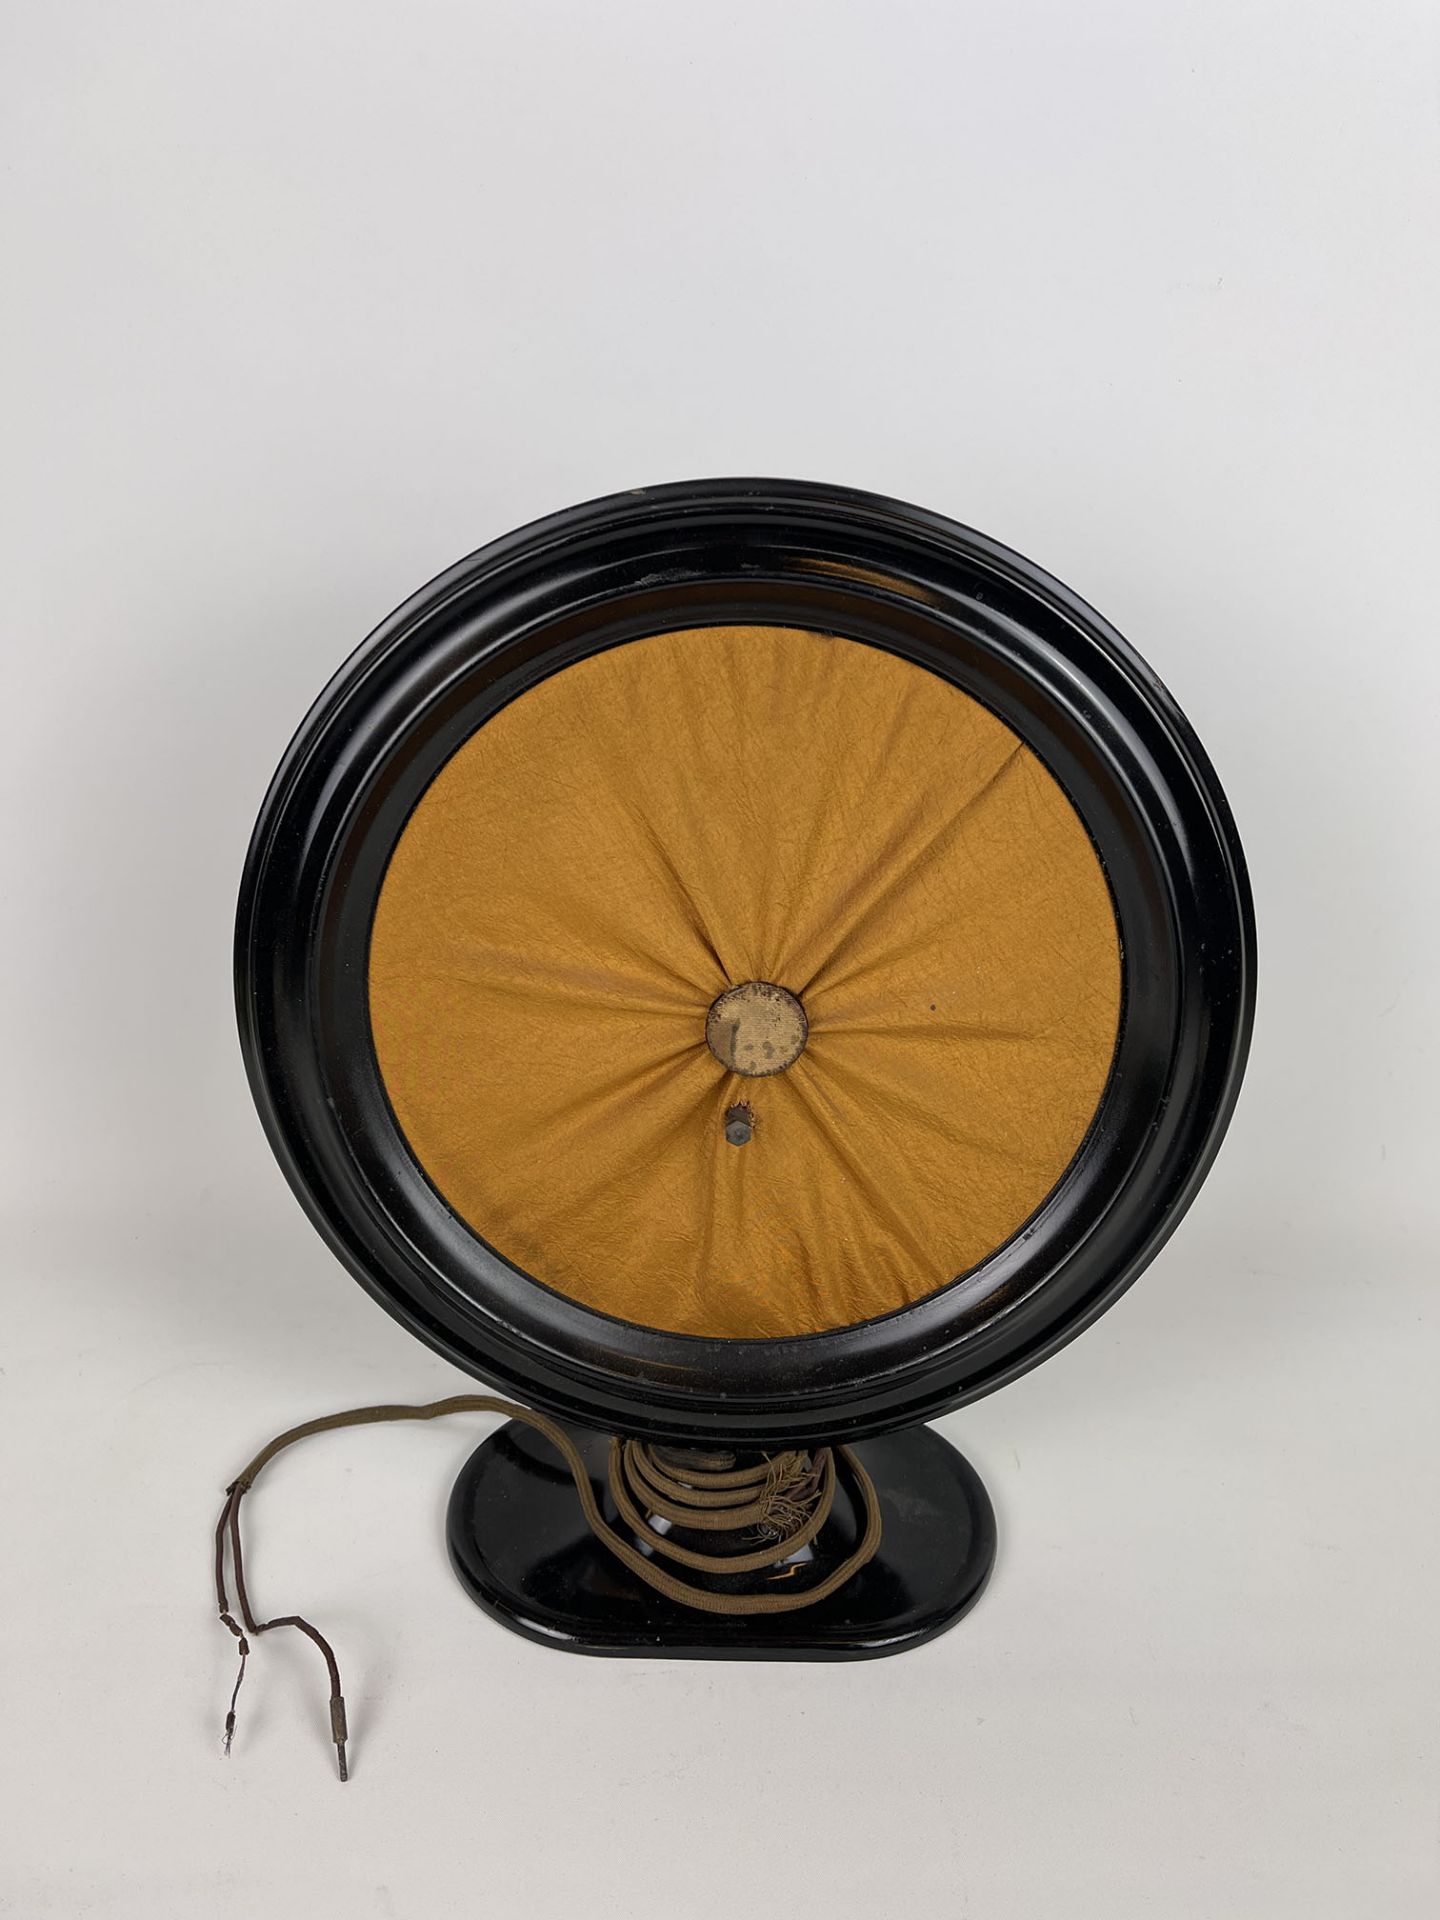 Lot of 5 Unrestored Vintage Radio Speakers - Image 6 of 9